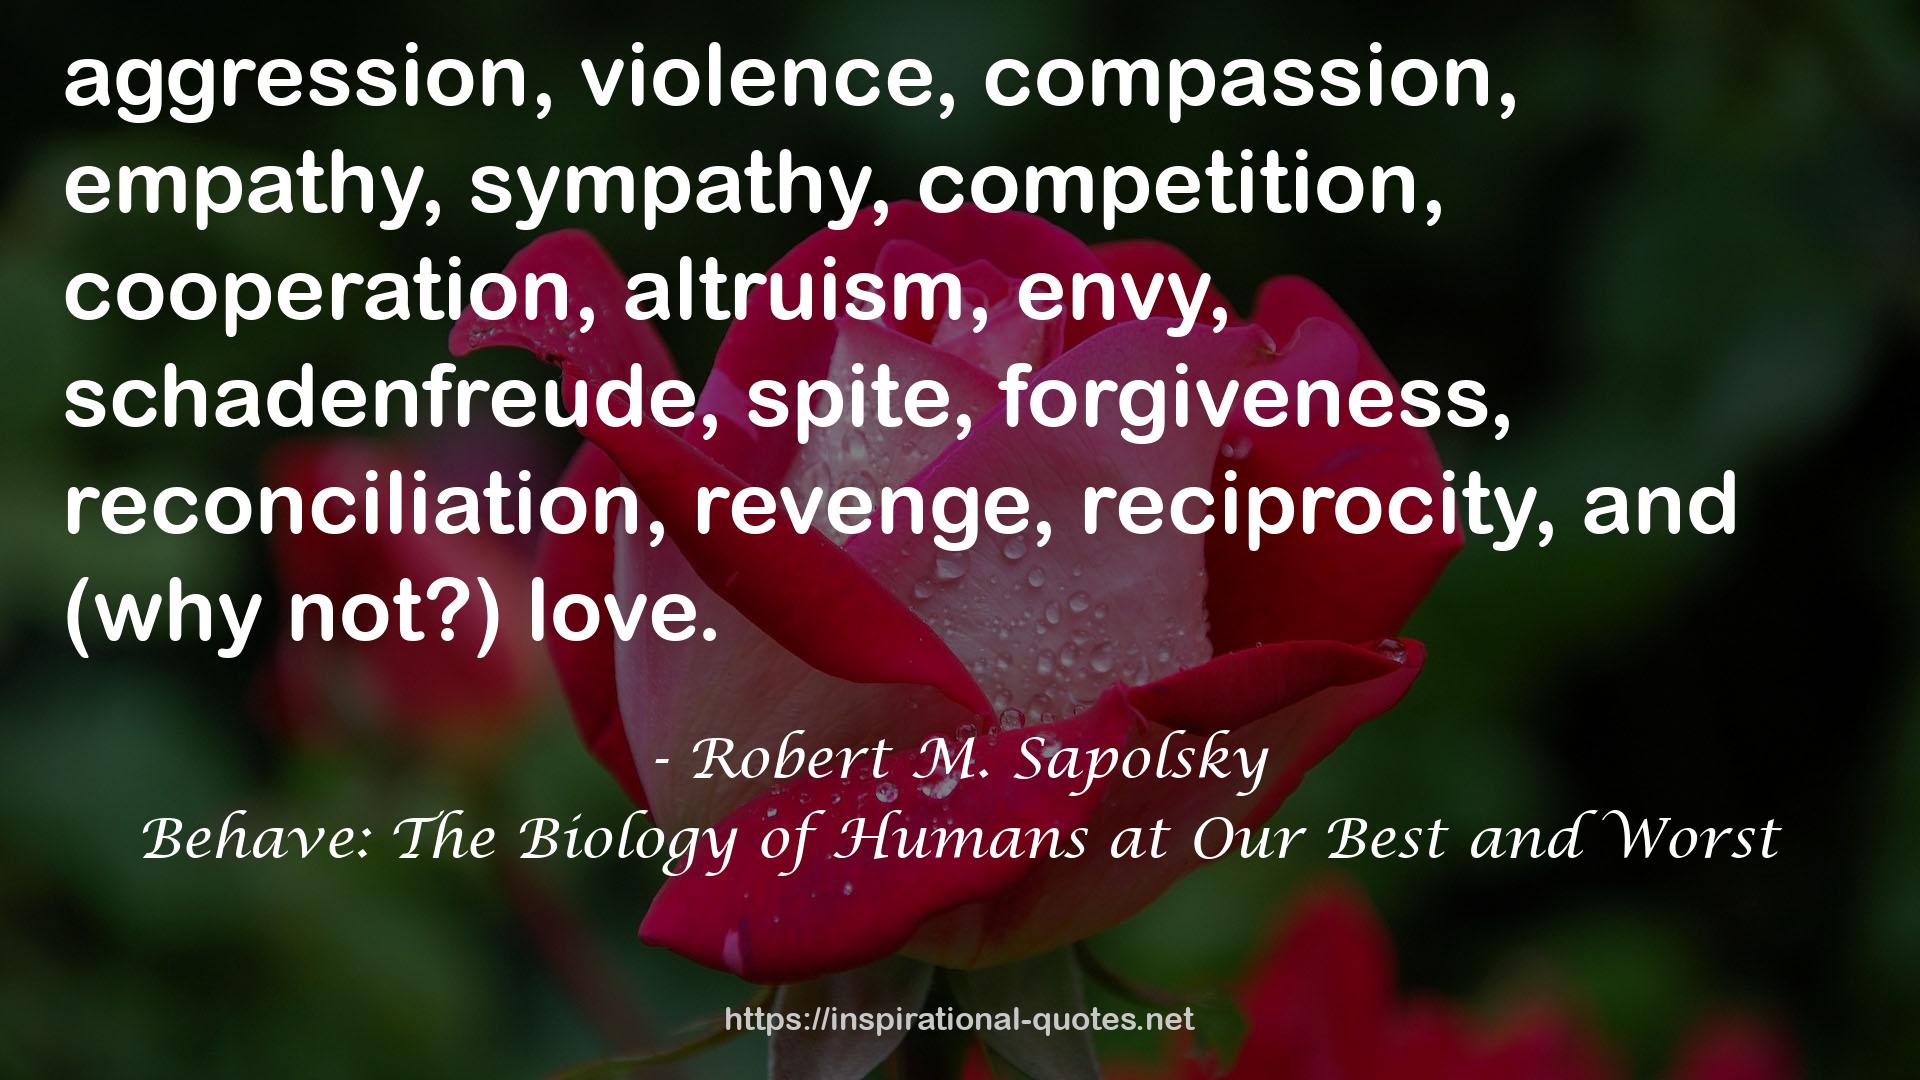 Robert M. Sapolsky QUOTES